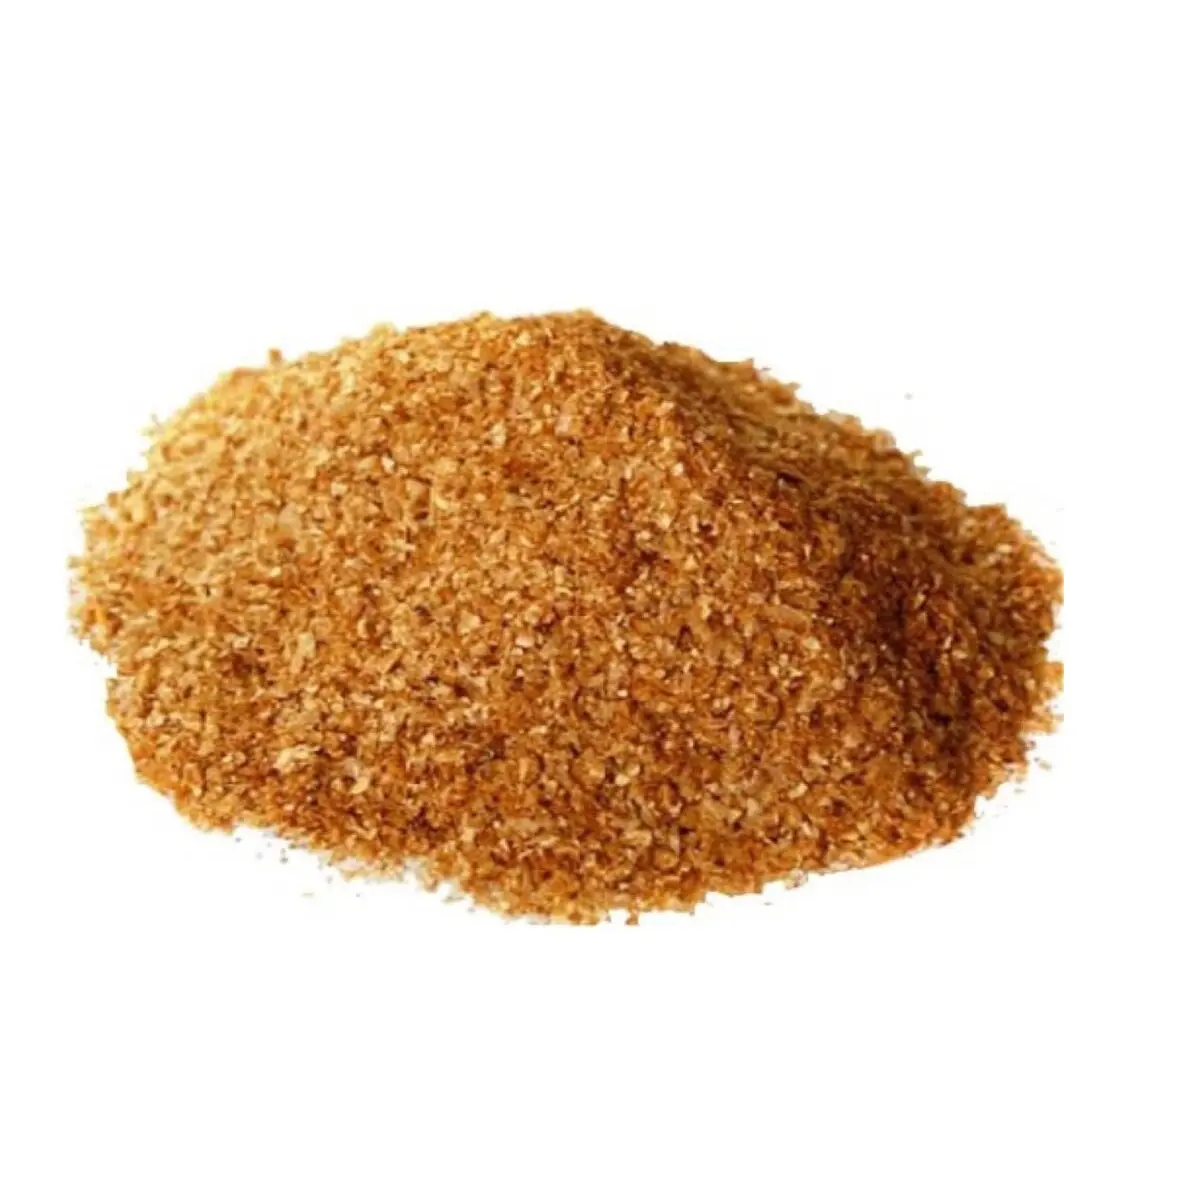 Venta caliente harina de maíz gluten alimentación para proveedor de animales alta calidad CGM polvo amarillo claro 100 por ciento de proteína